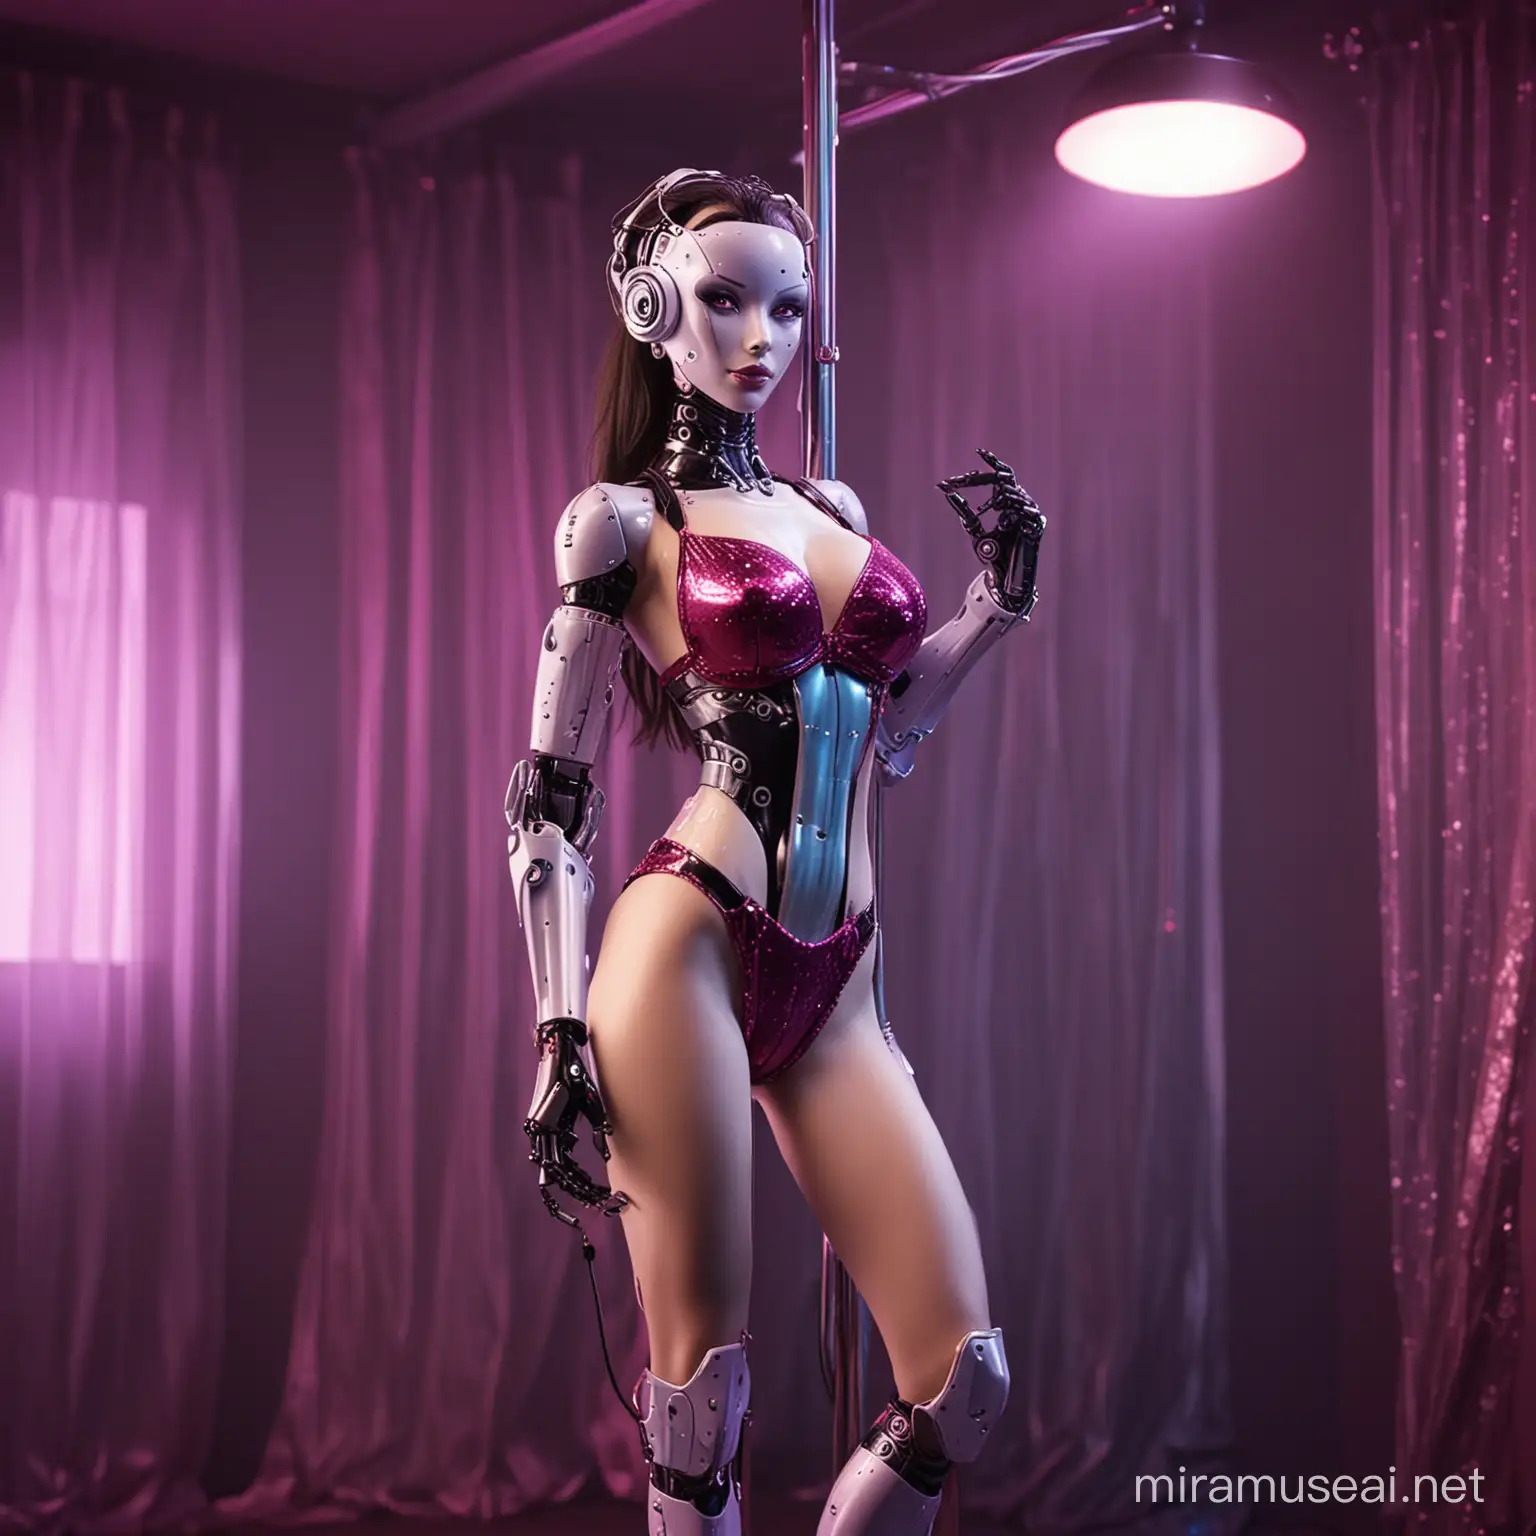 female robot in lingerie, pole dancing in brothel